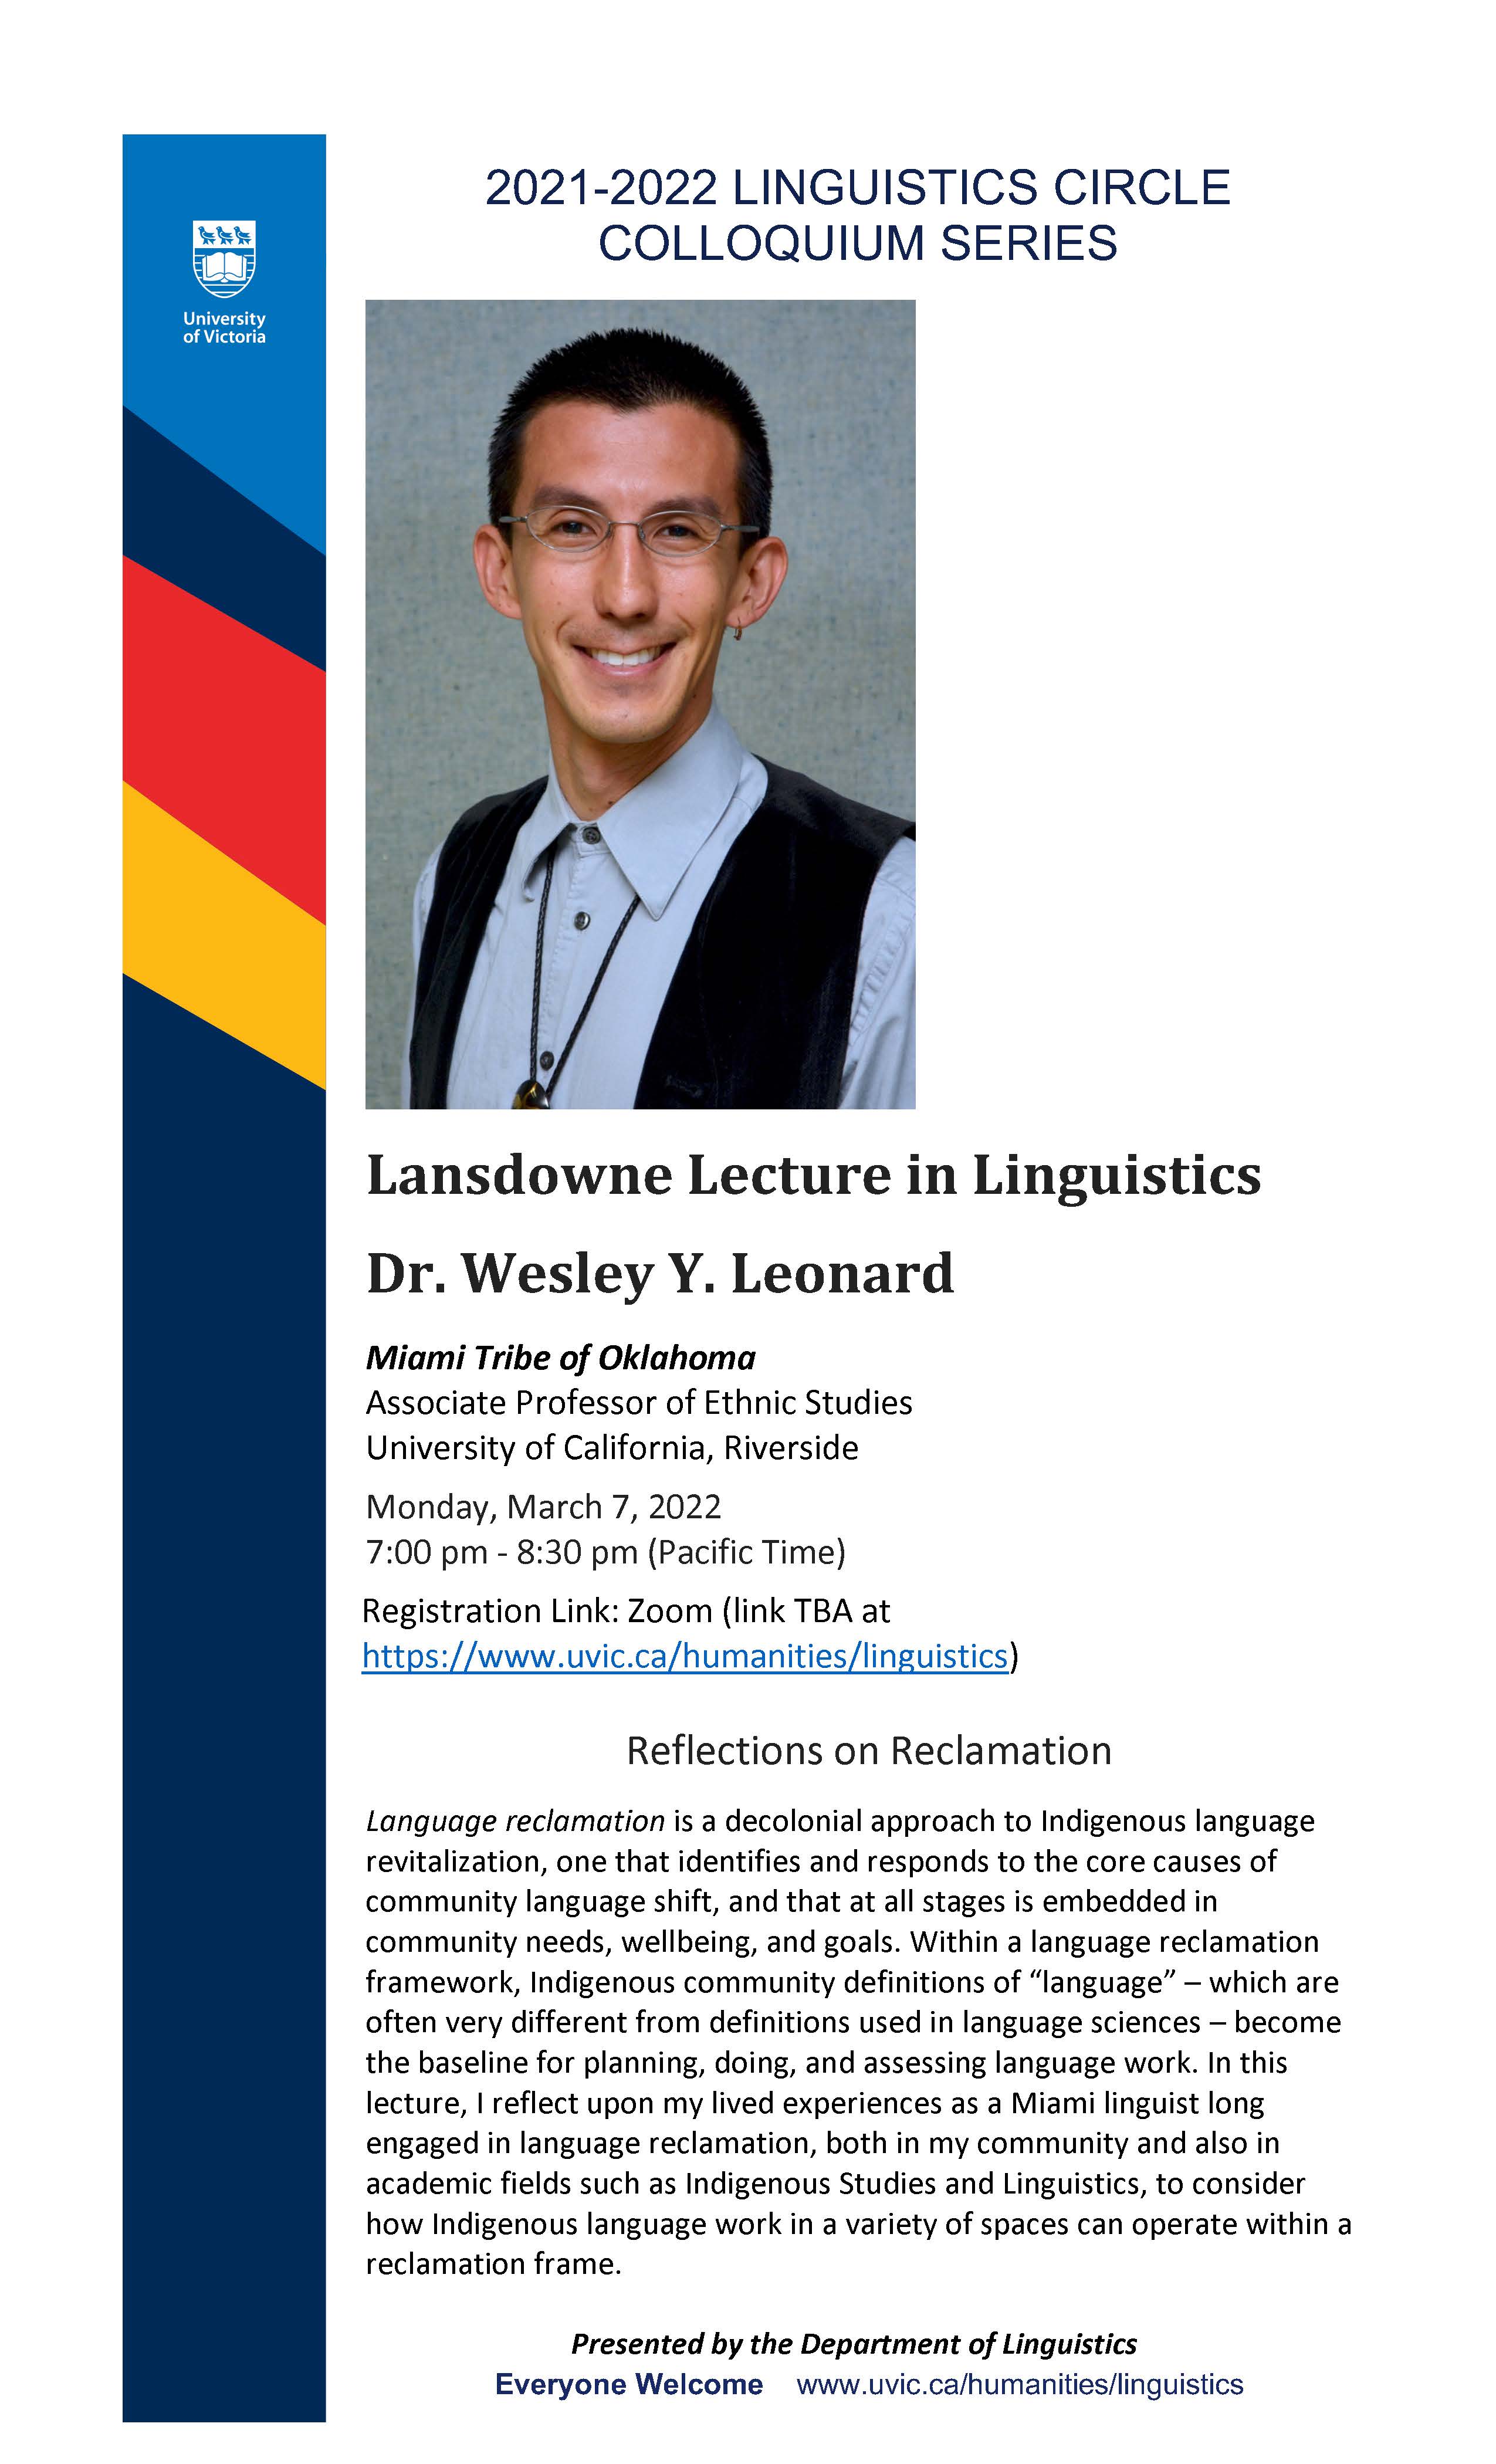 Lansdowne Lecture Poster